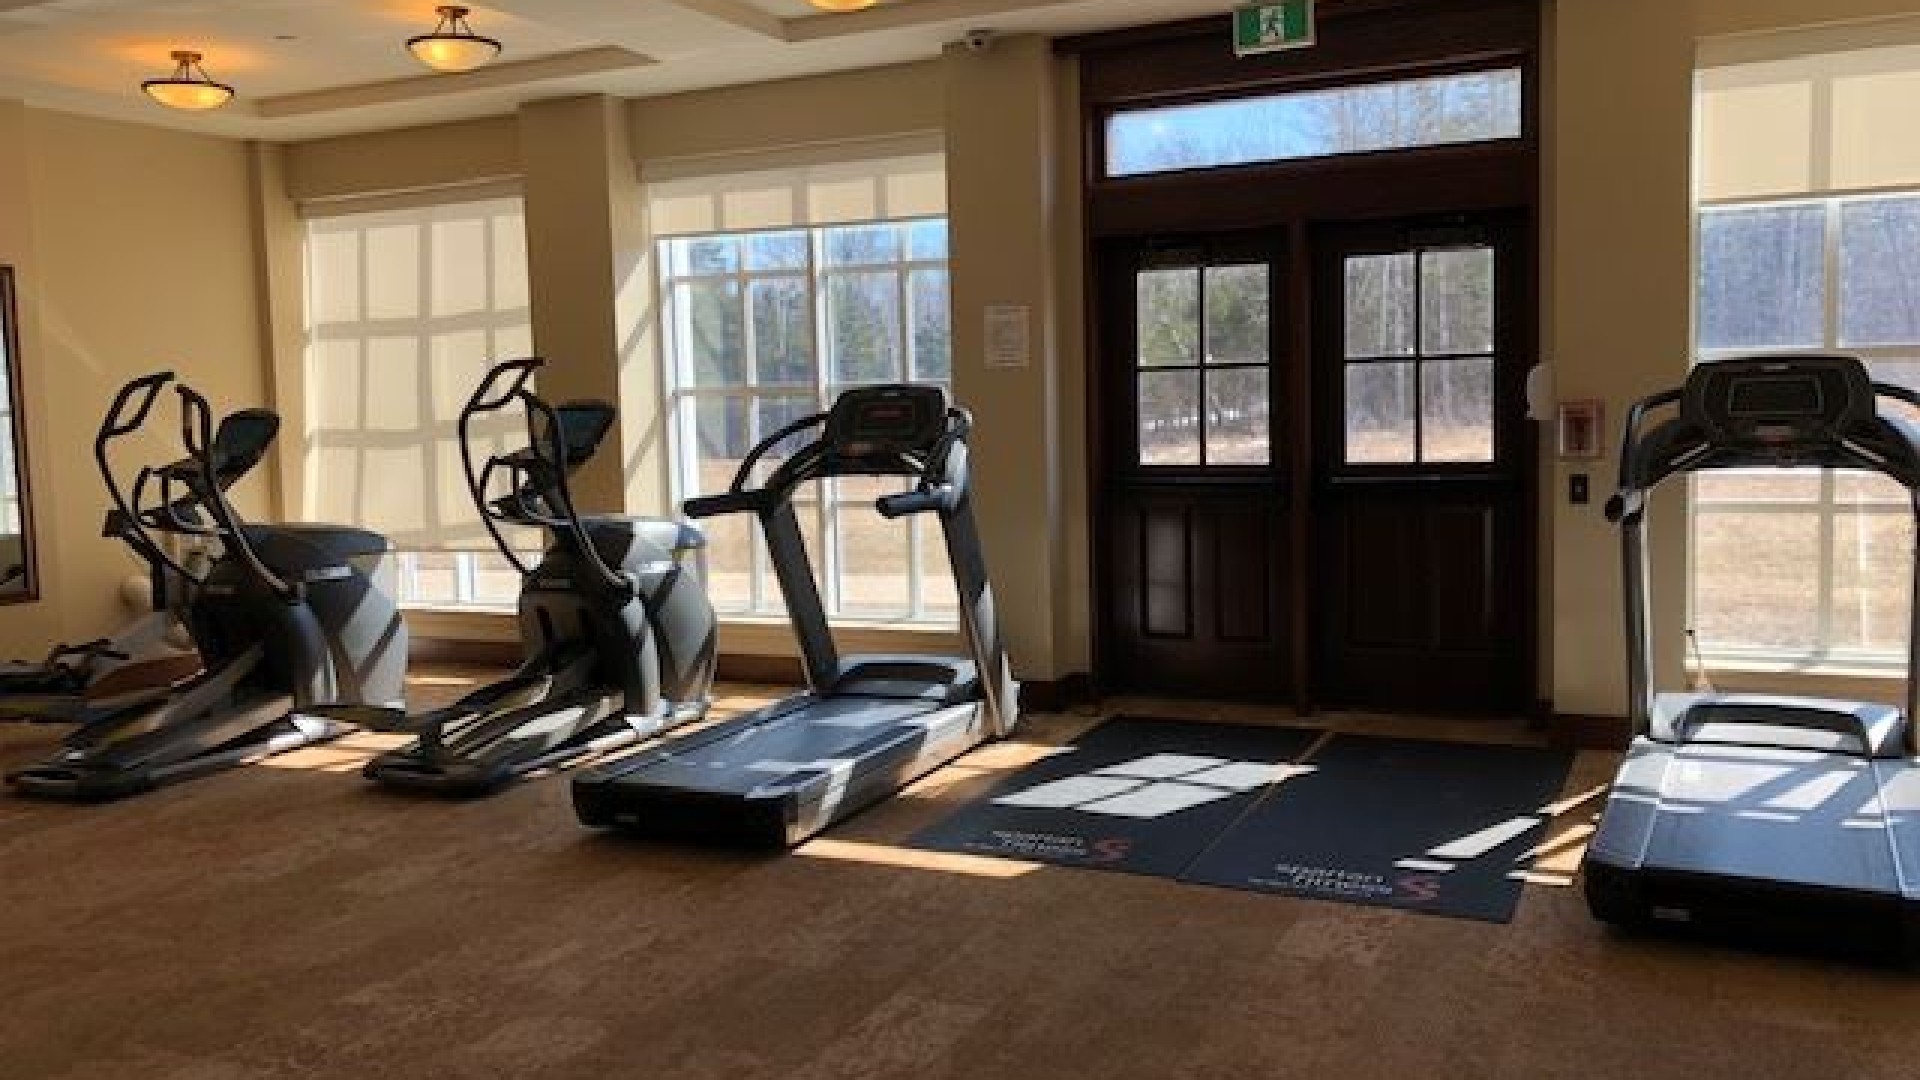 Cardio room with treadmills and large windows 